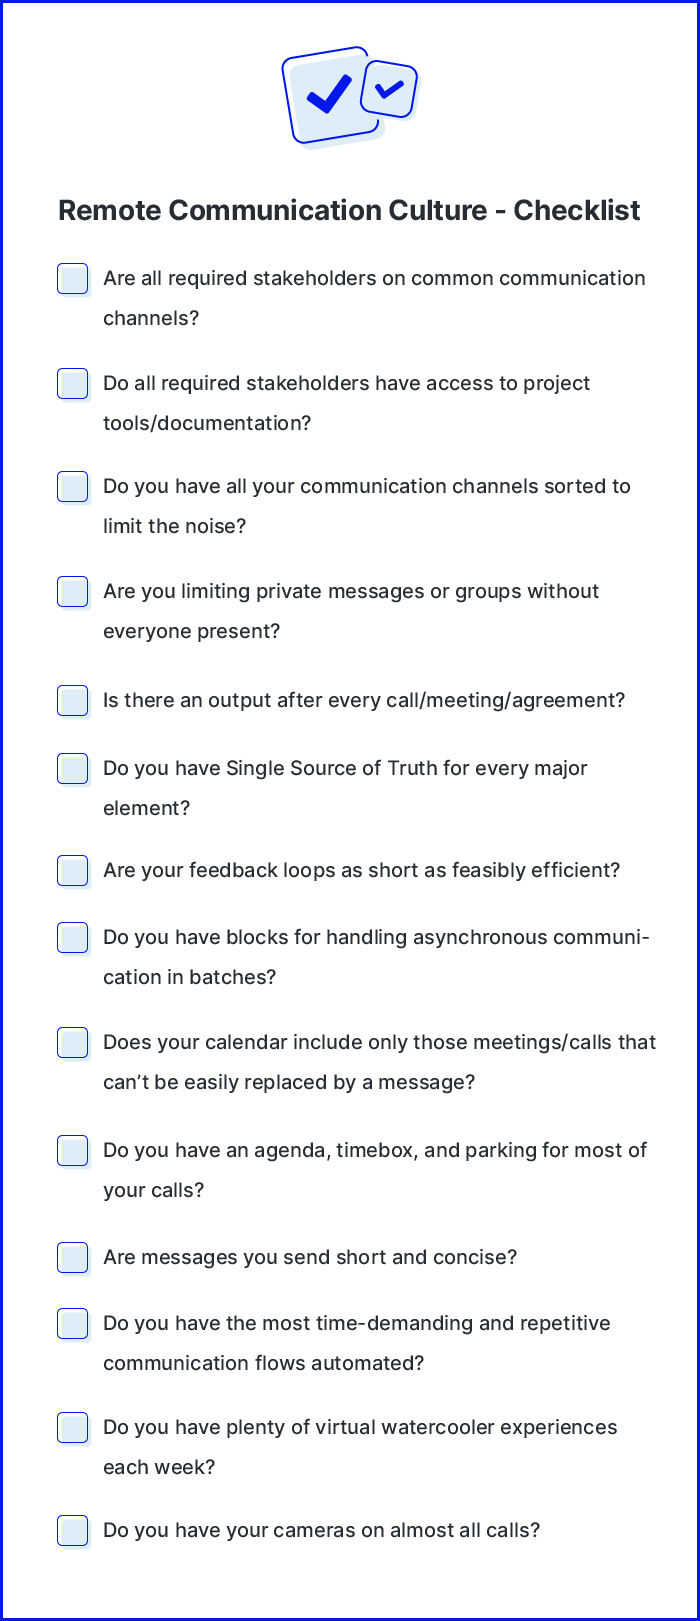 a checklist for remote communication culture